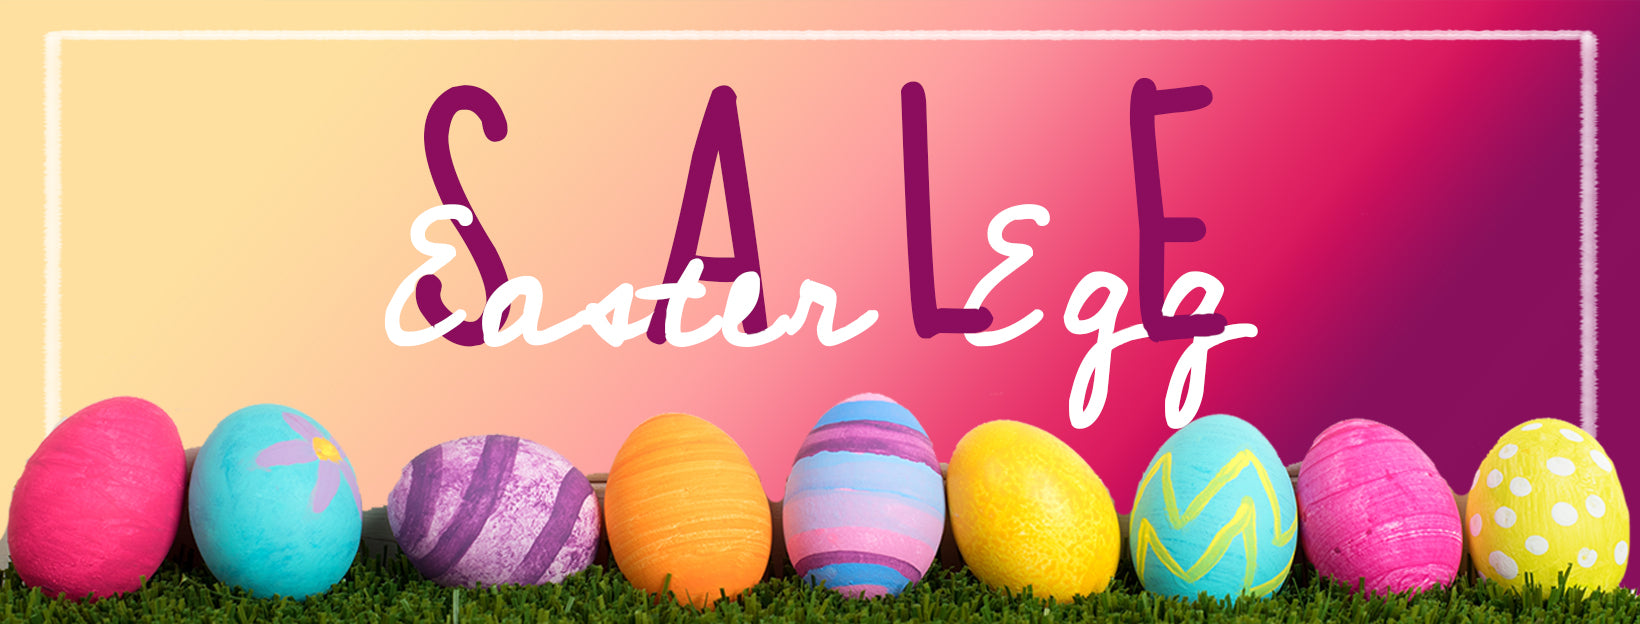 Join Our Easter Egg Hunt!